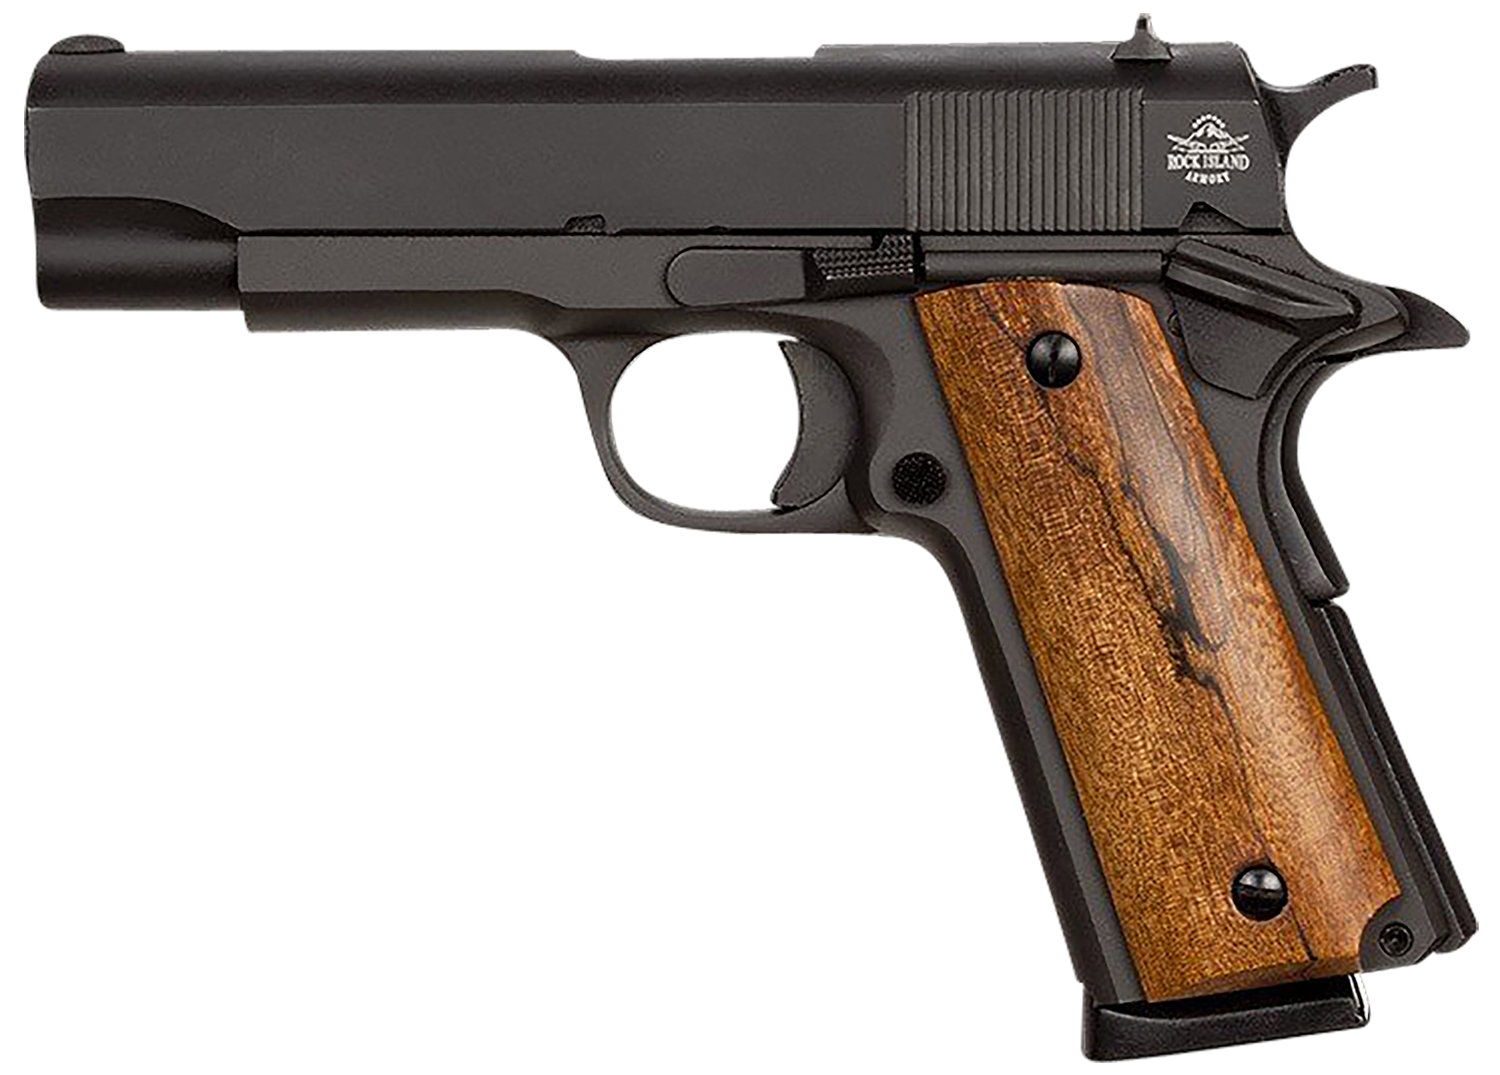 Rock Island M1911 A1 Gi 45 Acp 4 8rd Pistol Ma Compliant Black W Wood Grips Kygunco 6678